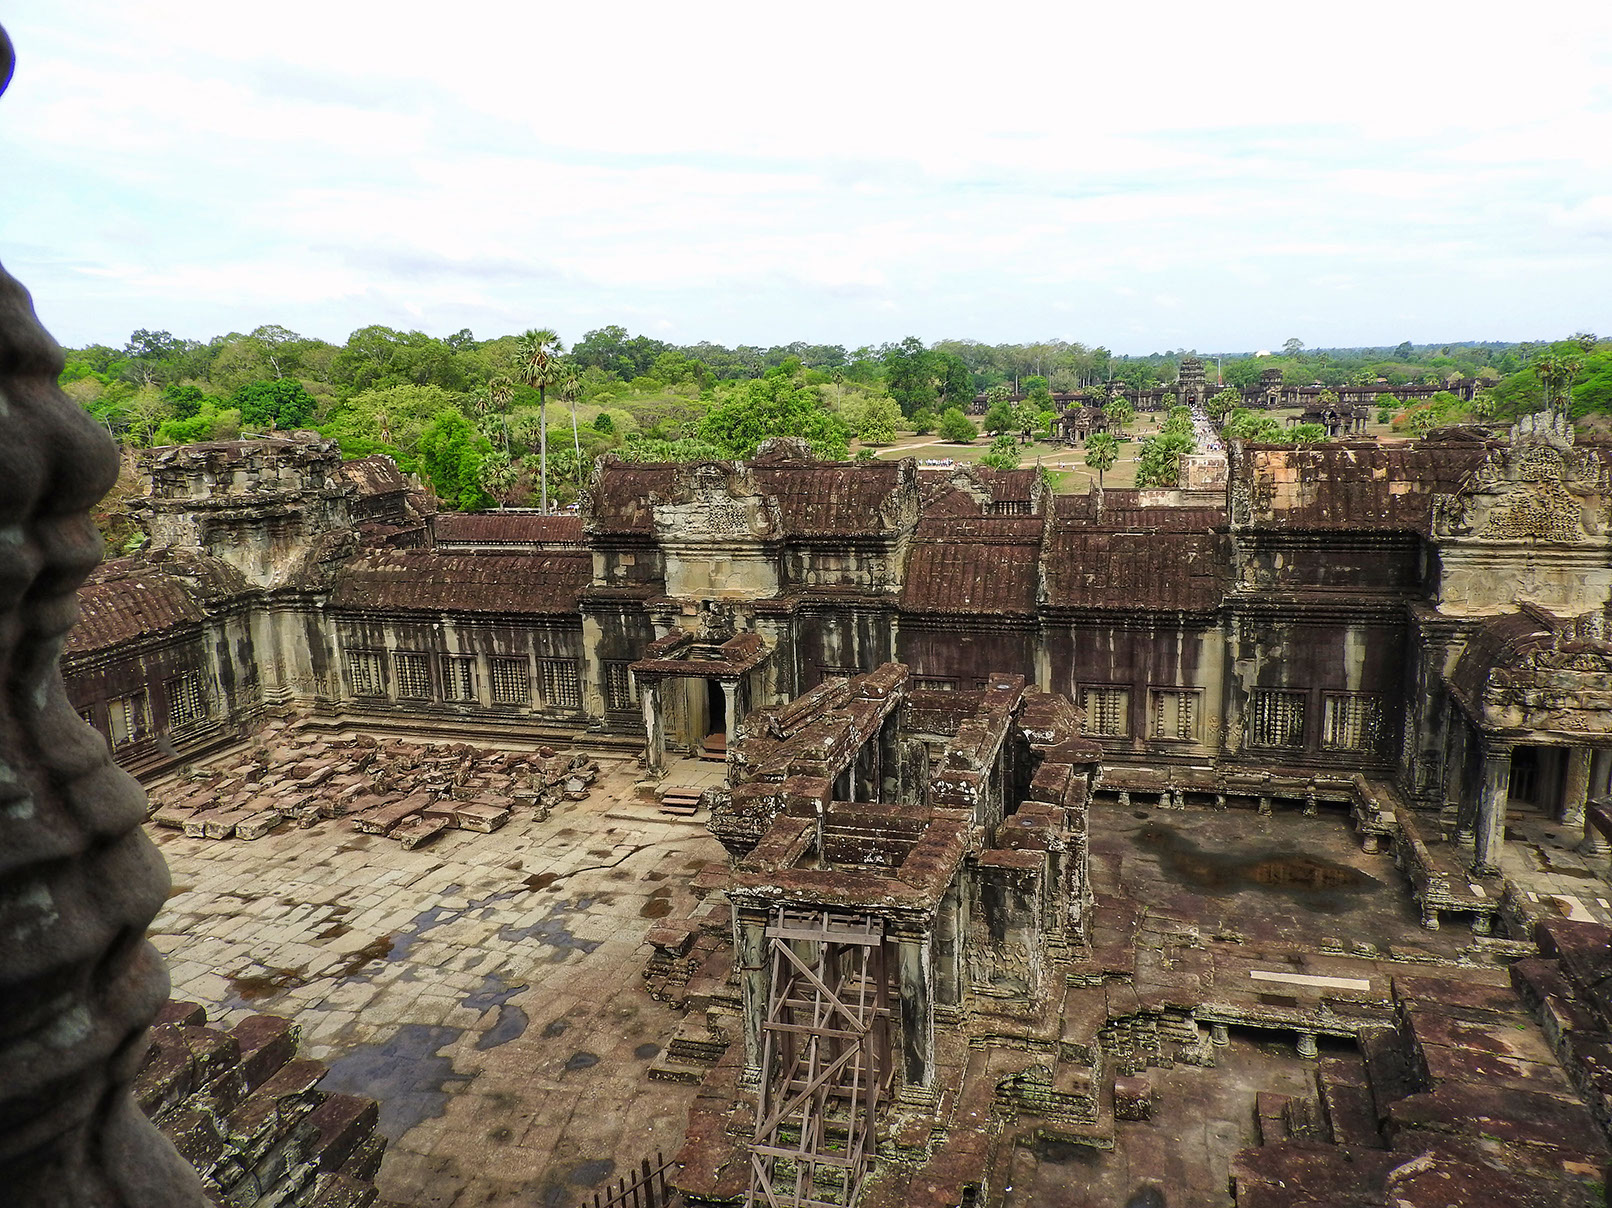 Restoration work in progress at Angkor Wat in Cambodia